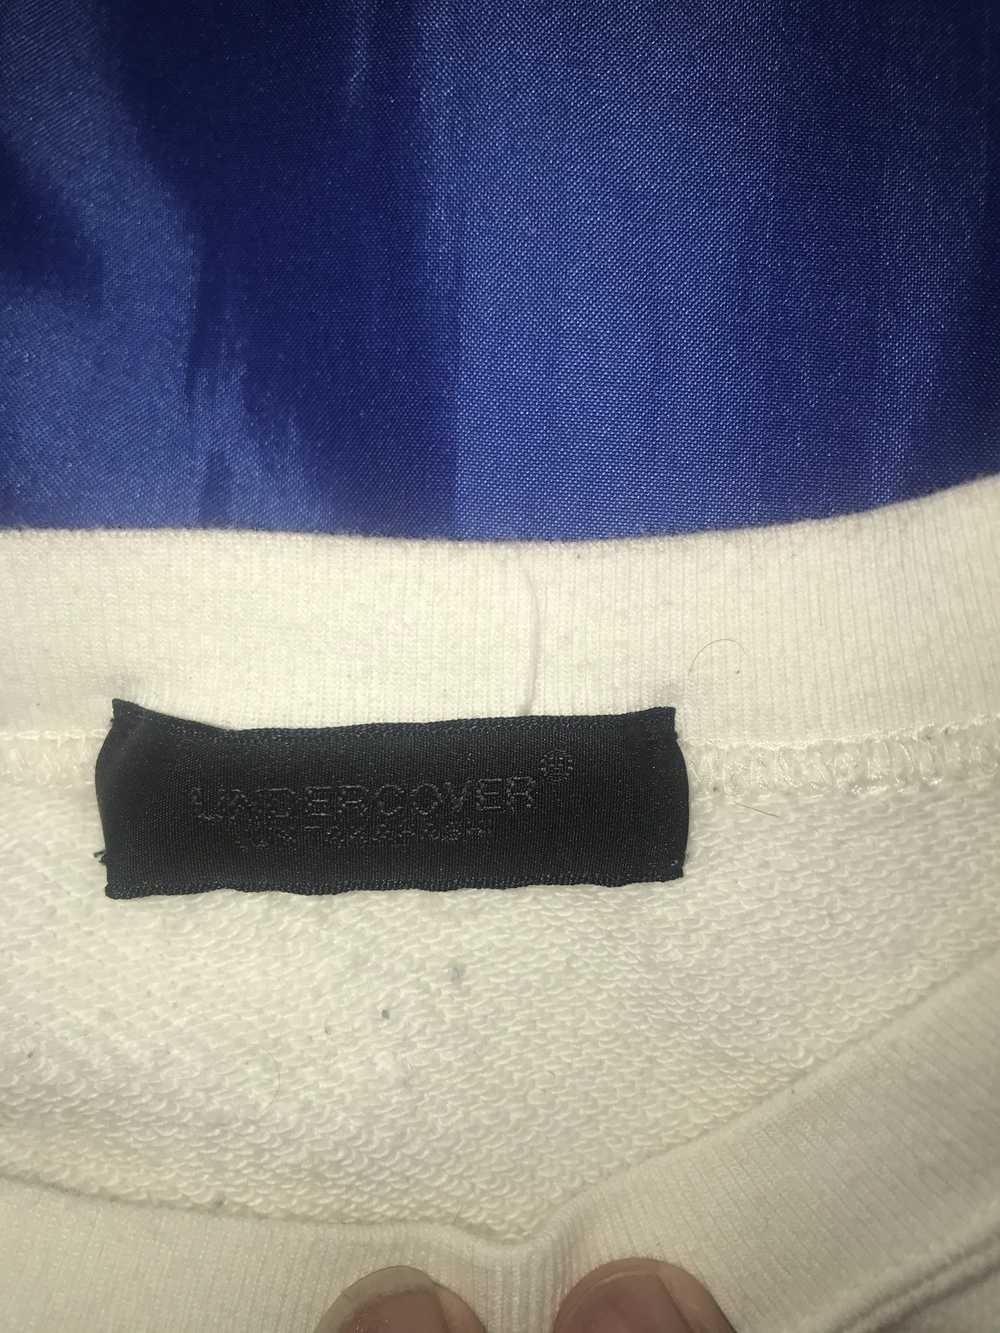 Undercover Undercover "Inner Disco" sweater - image 5